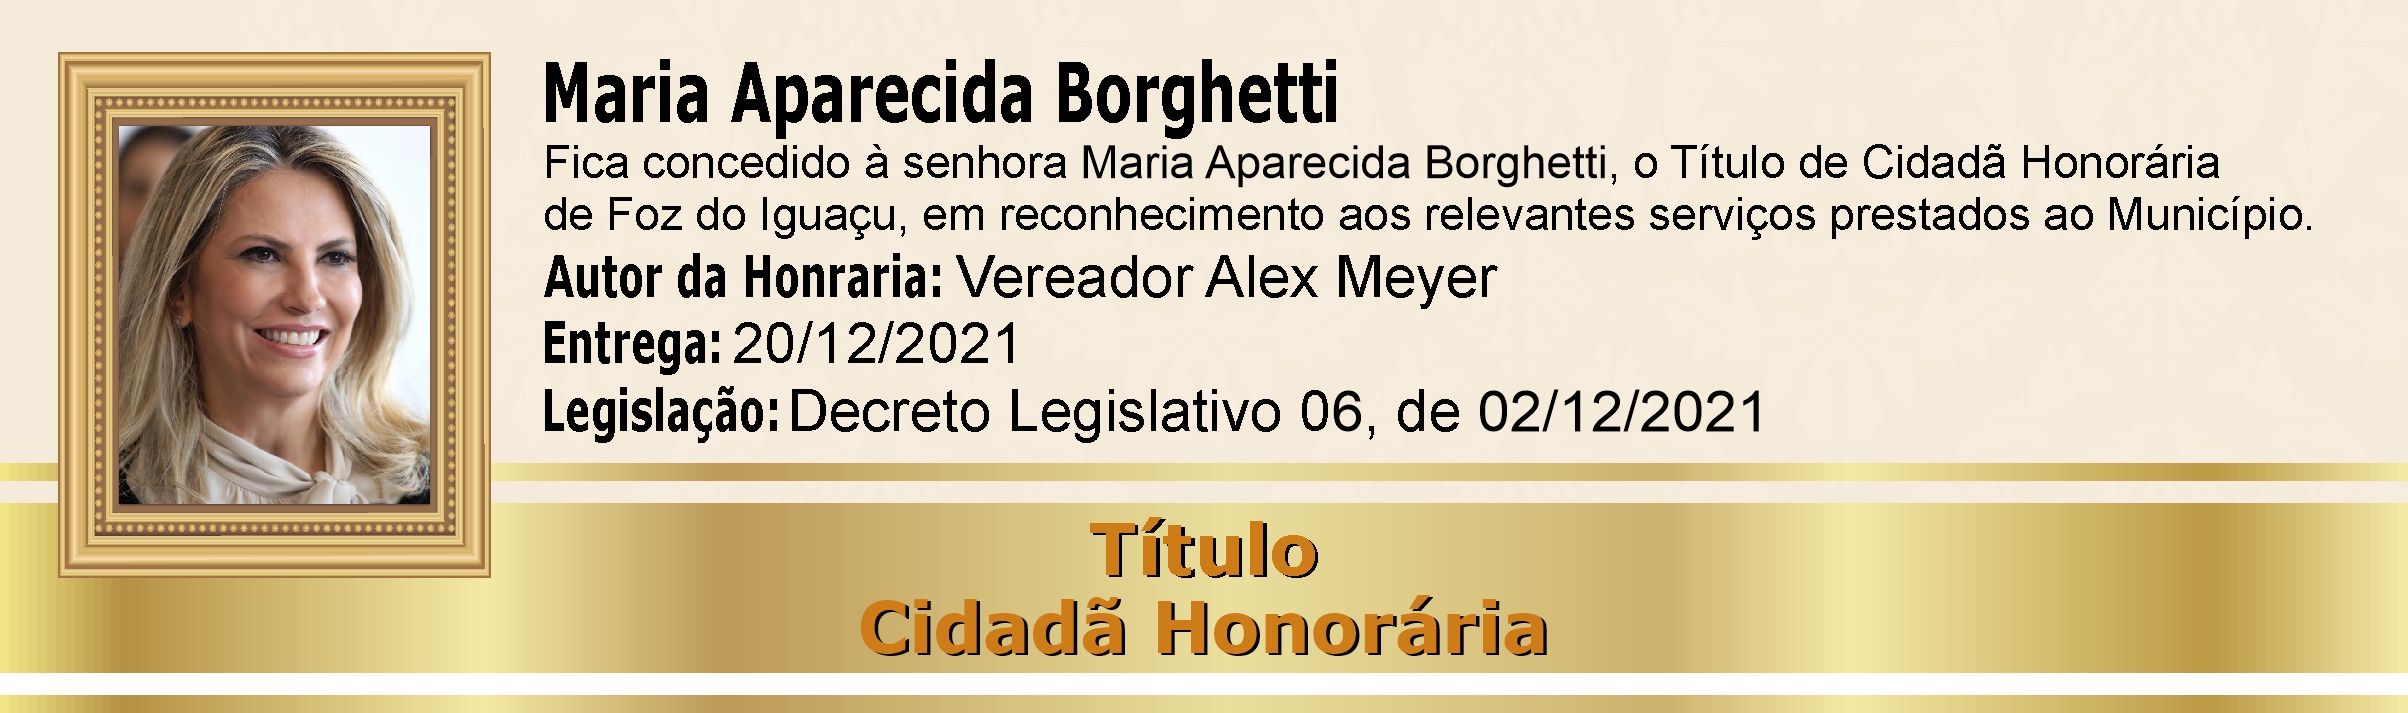 Maria Aparecida Borghetti